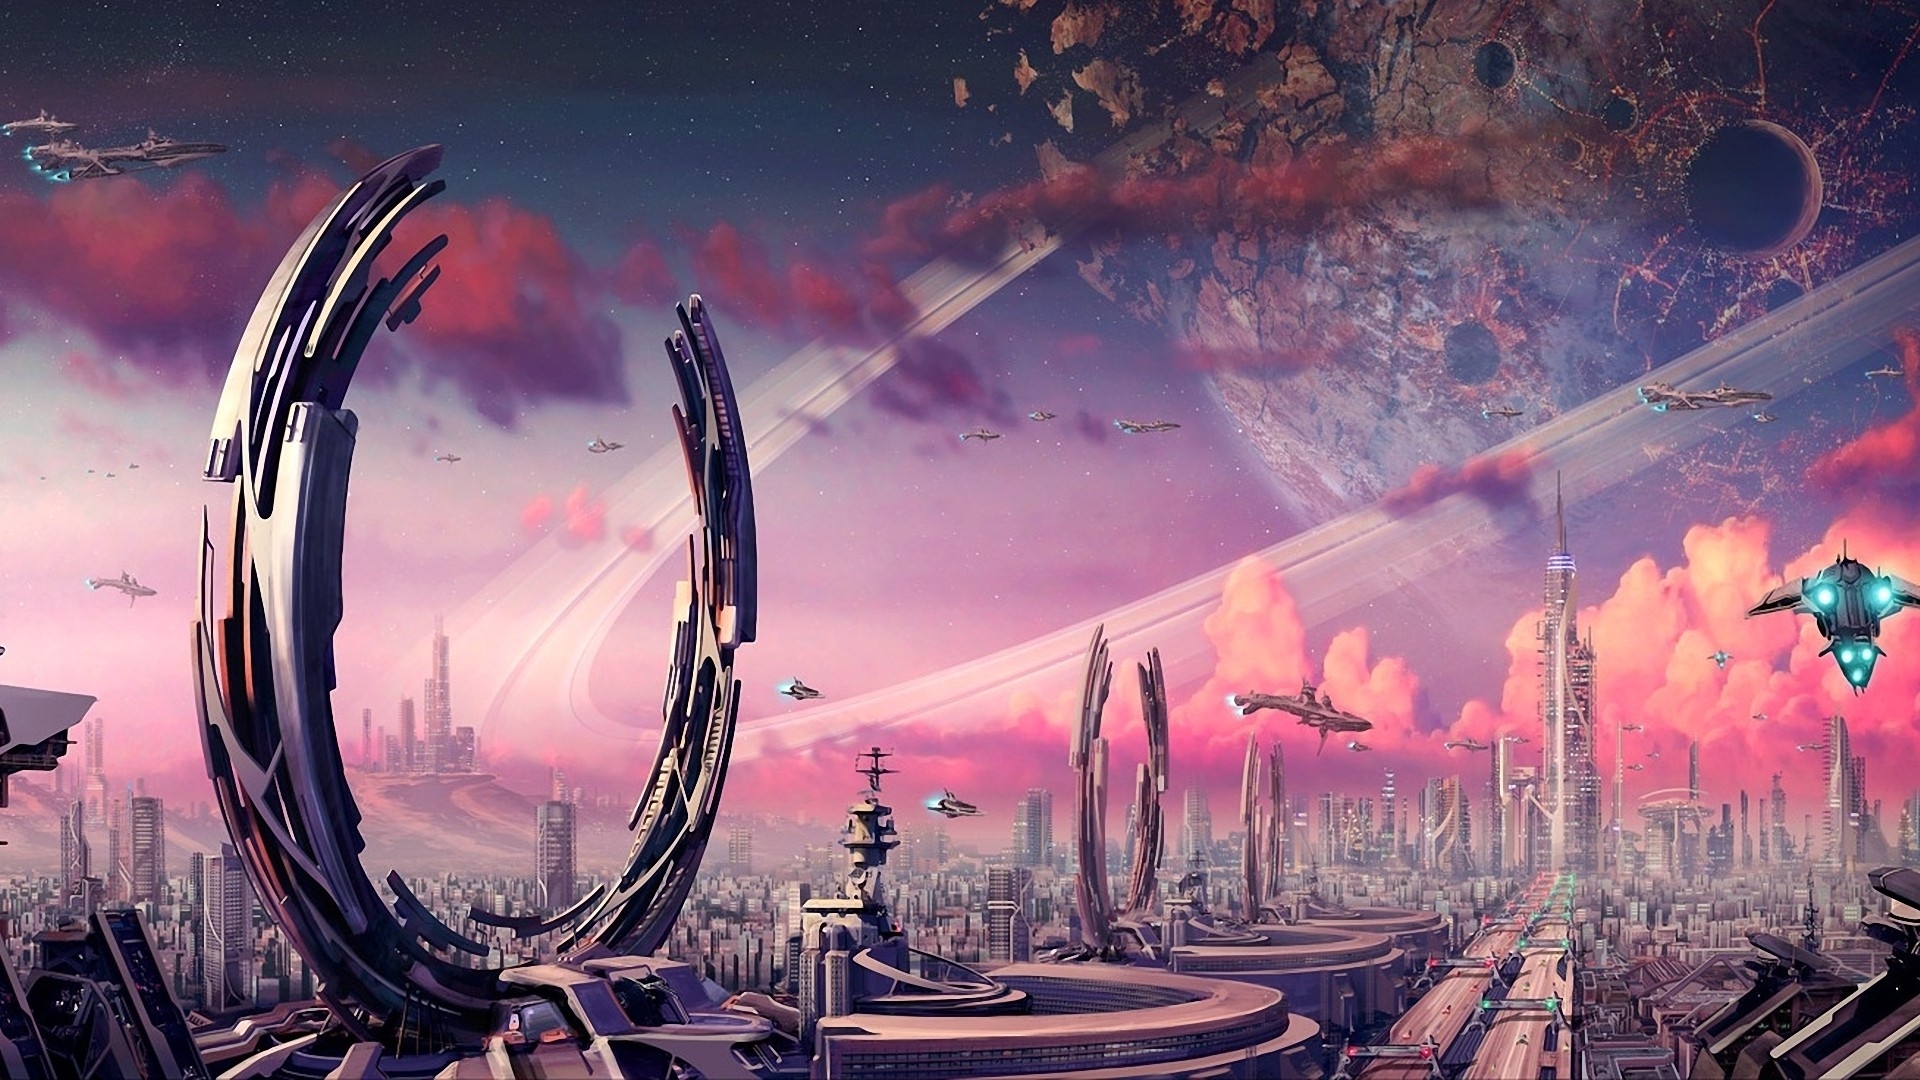 Art Spaceships Science Fiction Artwork Airship Cities Wallpaper